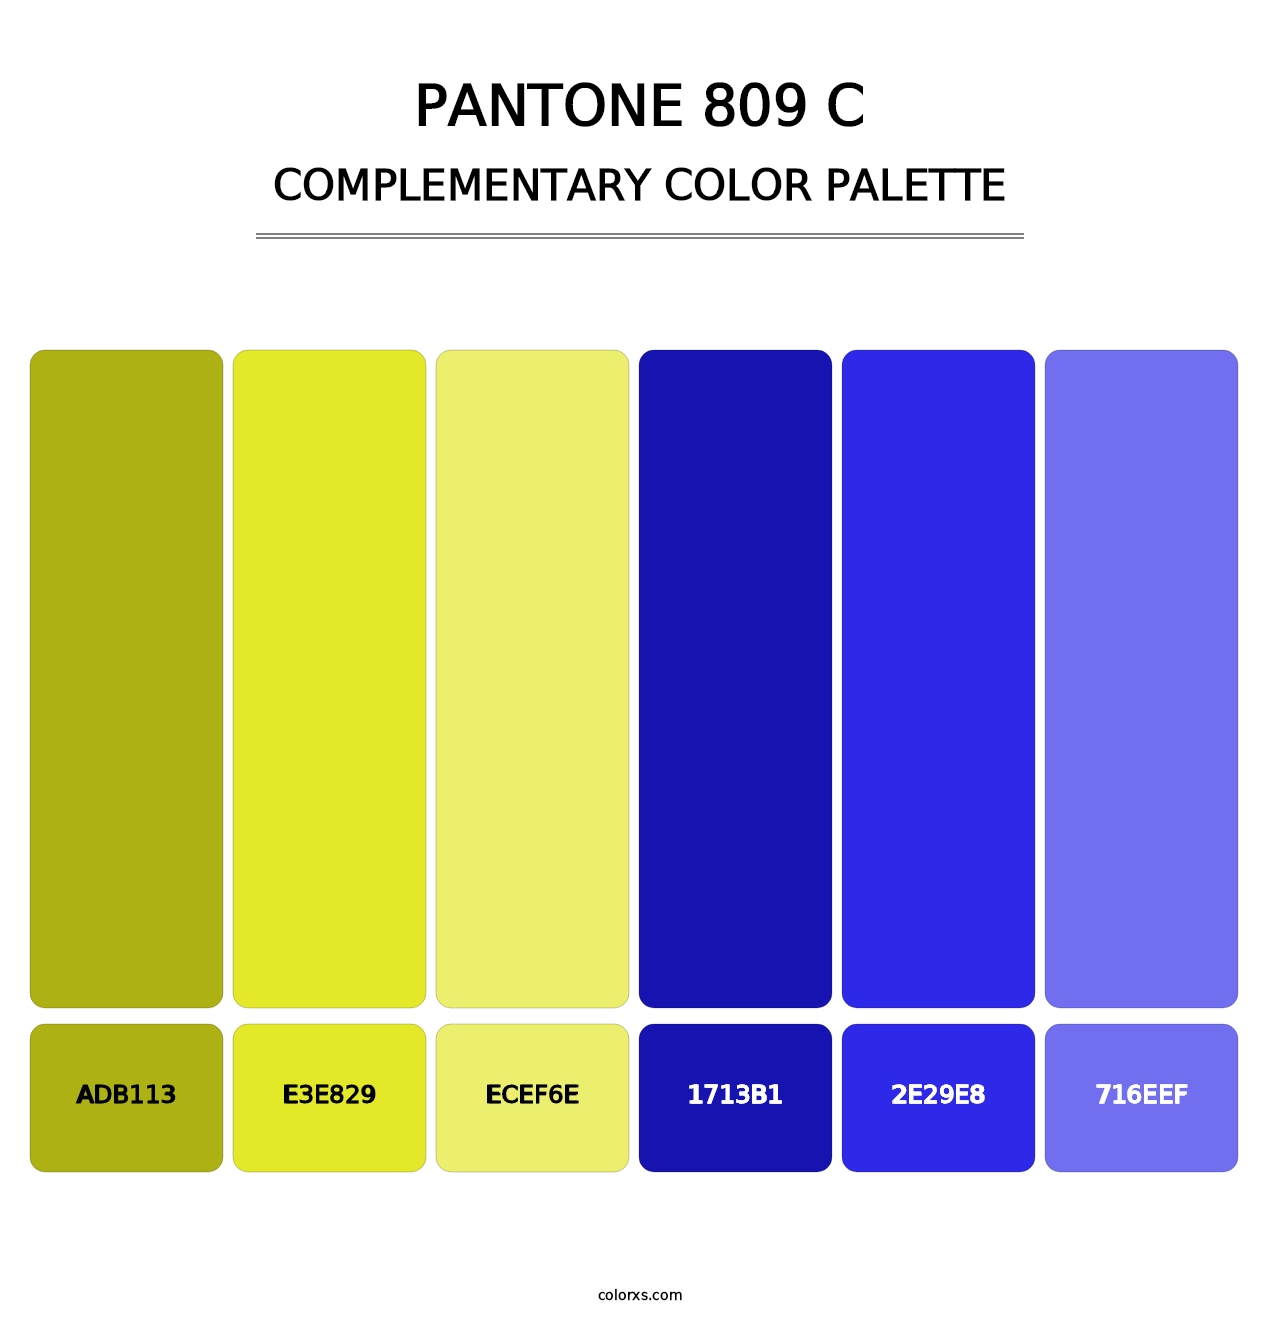 PANTONE 809 C - Complementary Color Palette